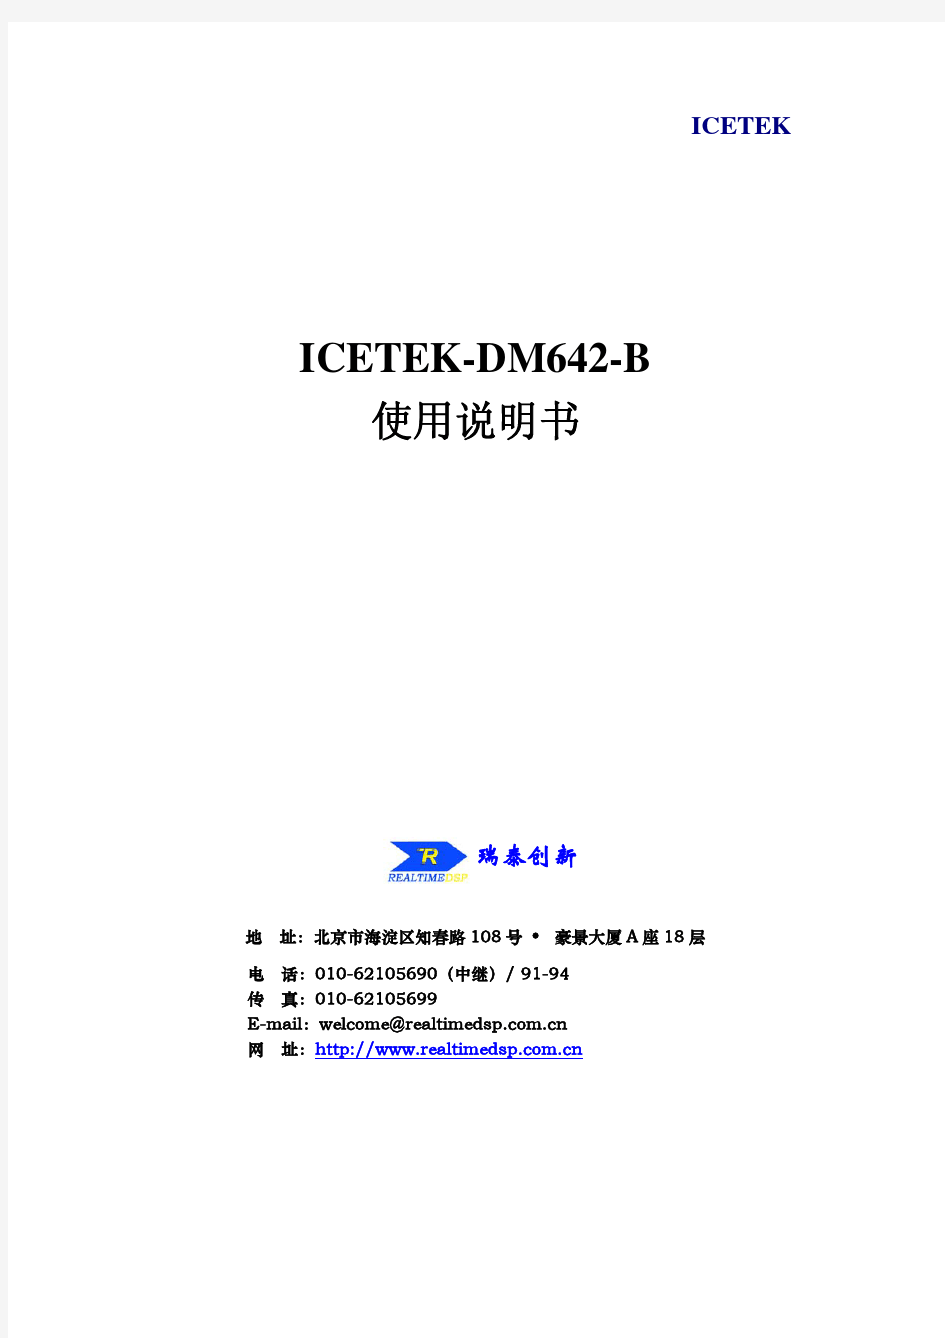 ICETEK-DM642-B使用说明书